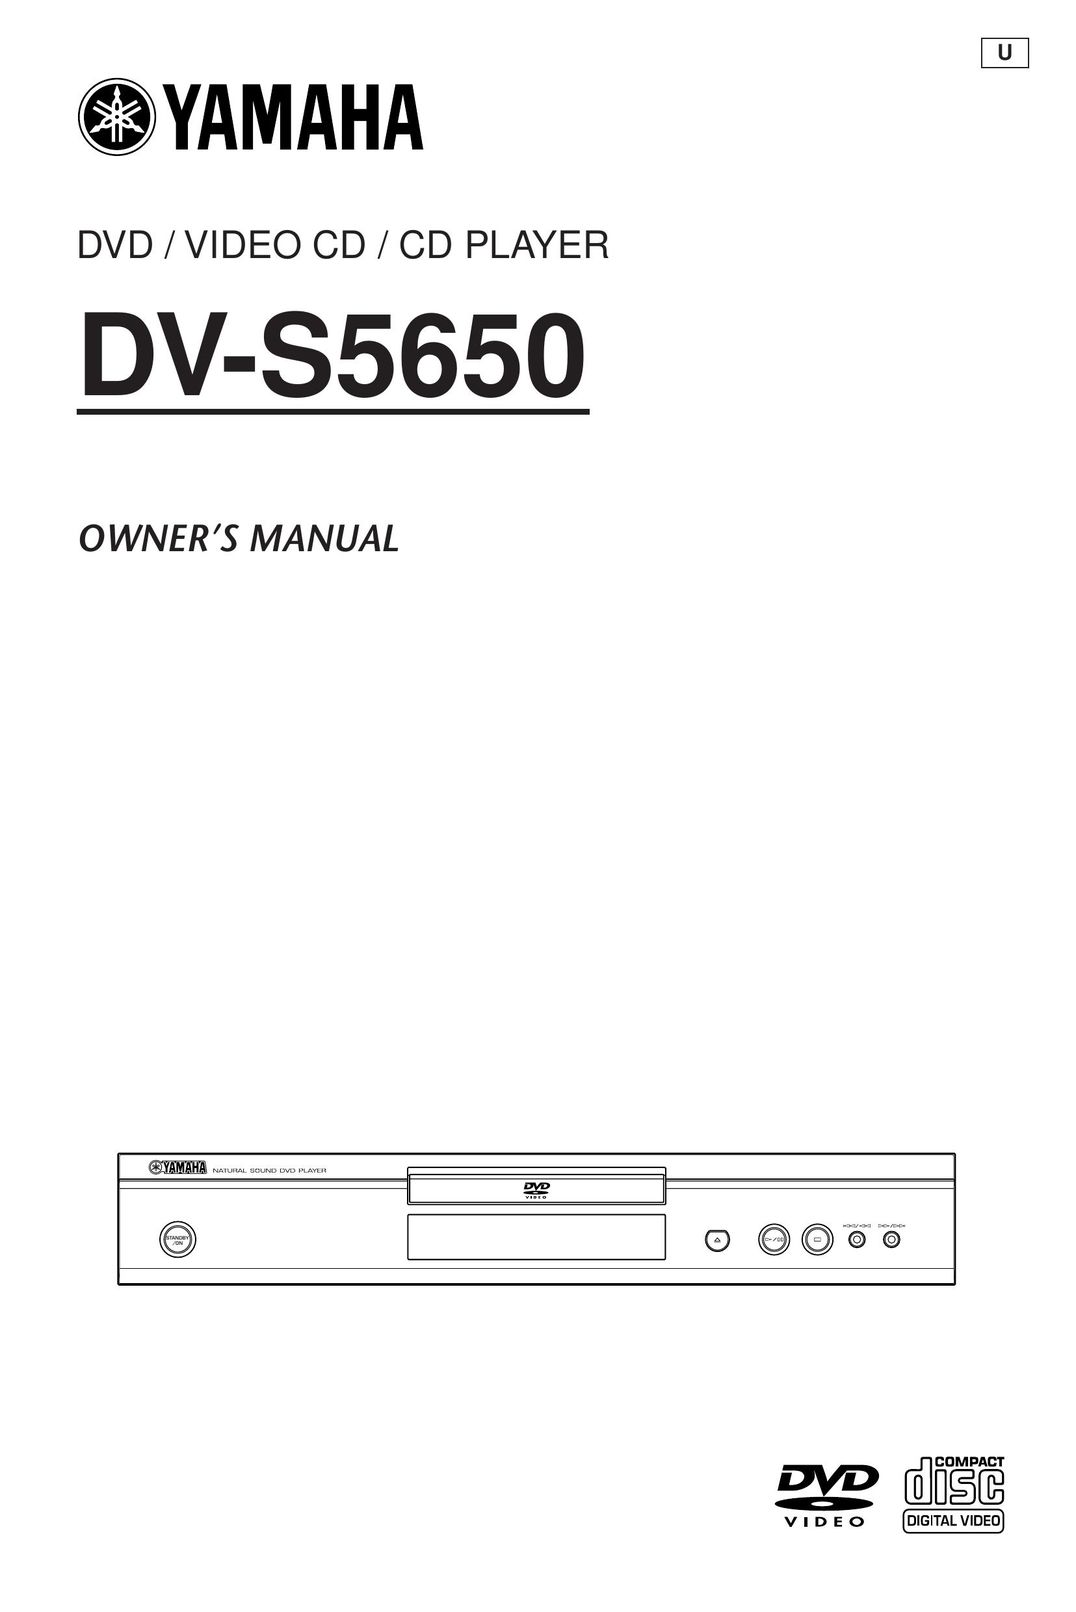 Yamaha DV-S5650 DVD Player User Manual